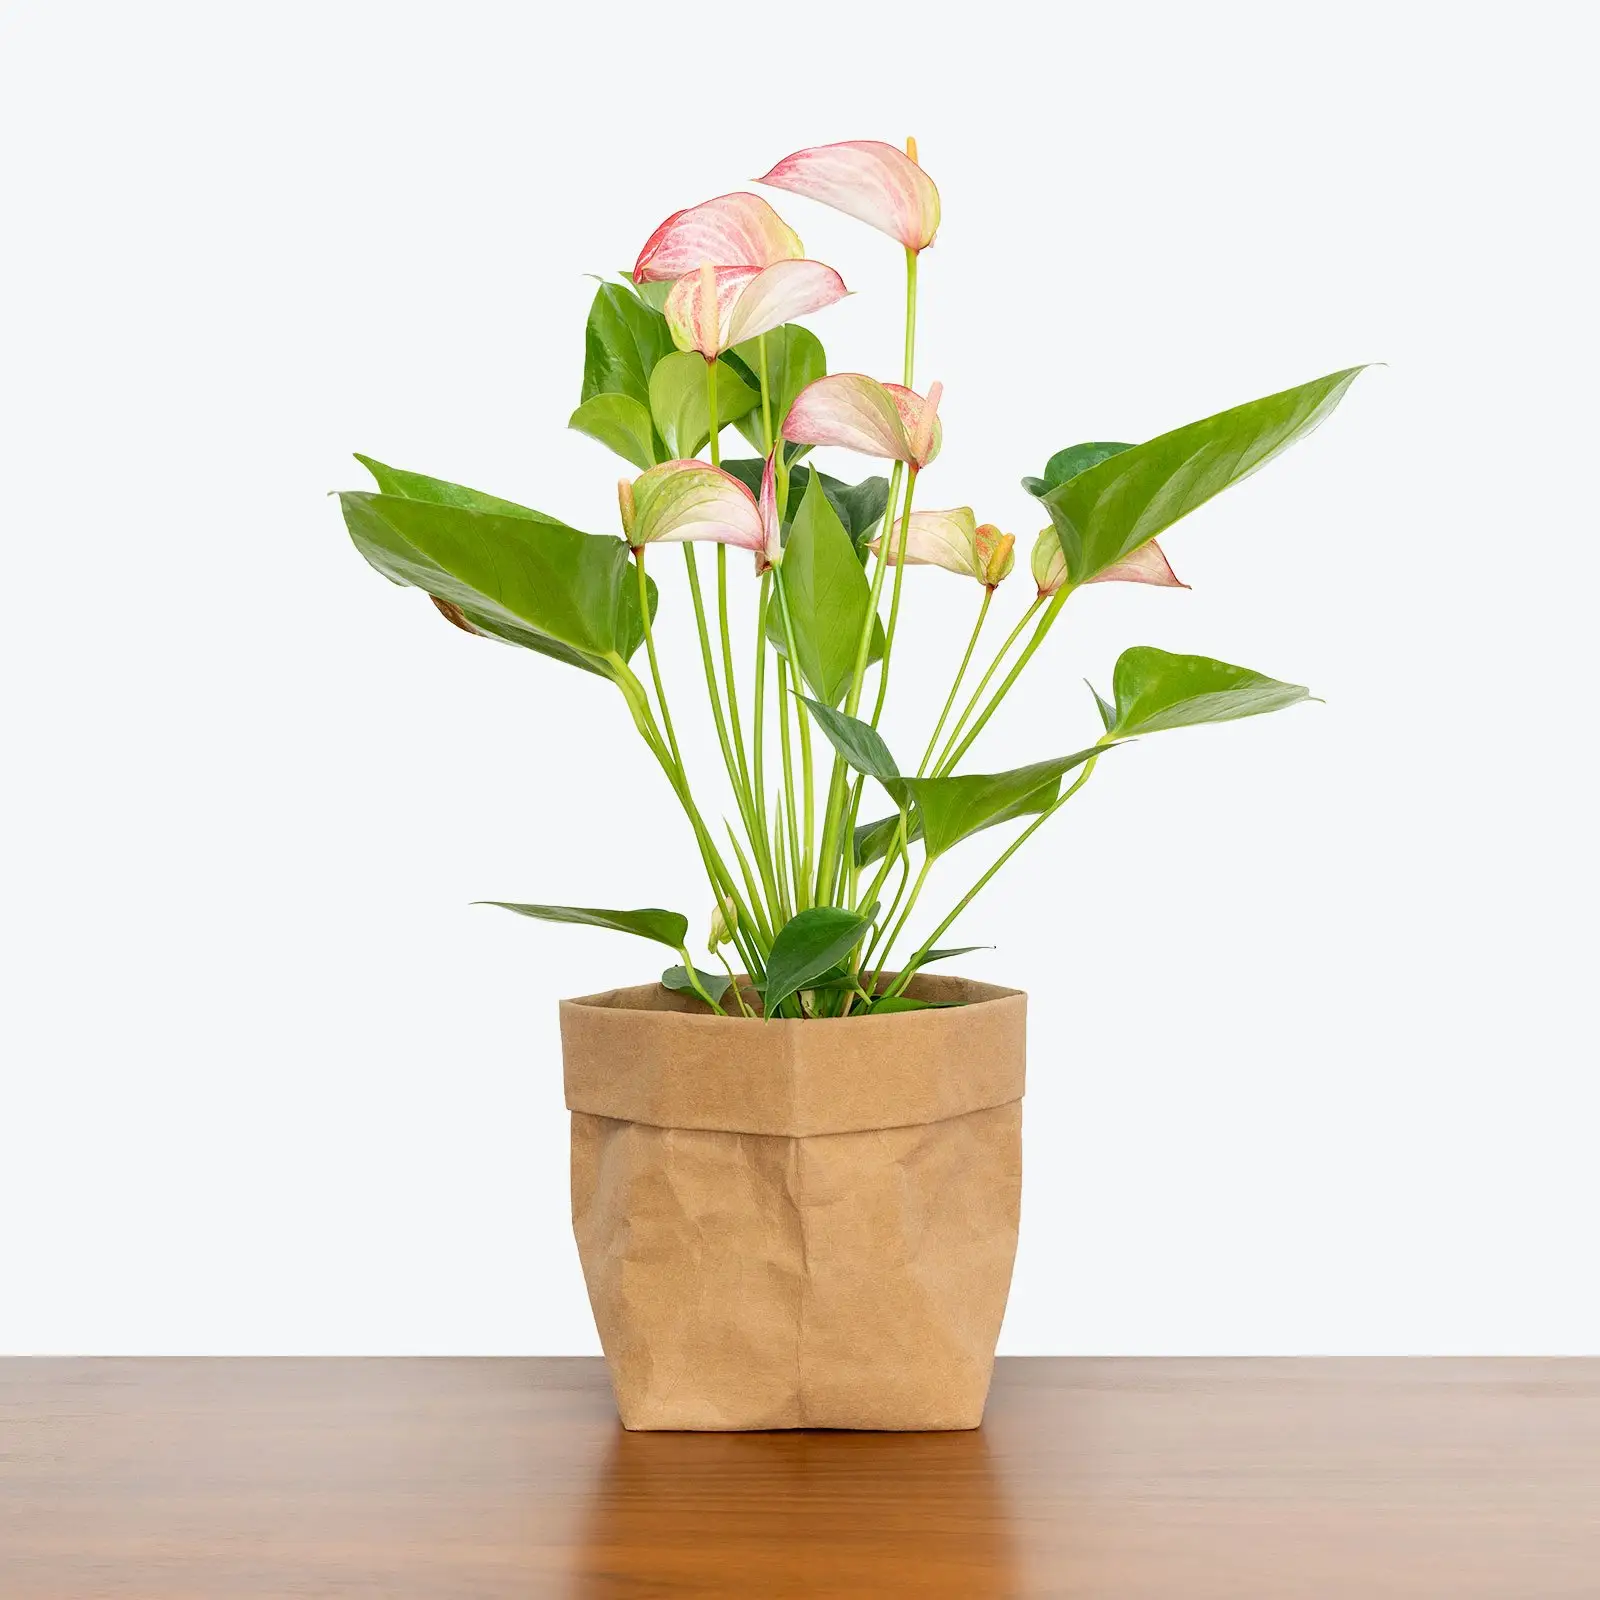 Wholesale tropical live plants Anthurium or the Tail Flower Flamingo Flower or Laceleaf plants for indoor decoration